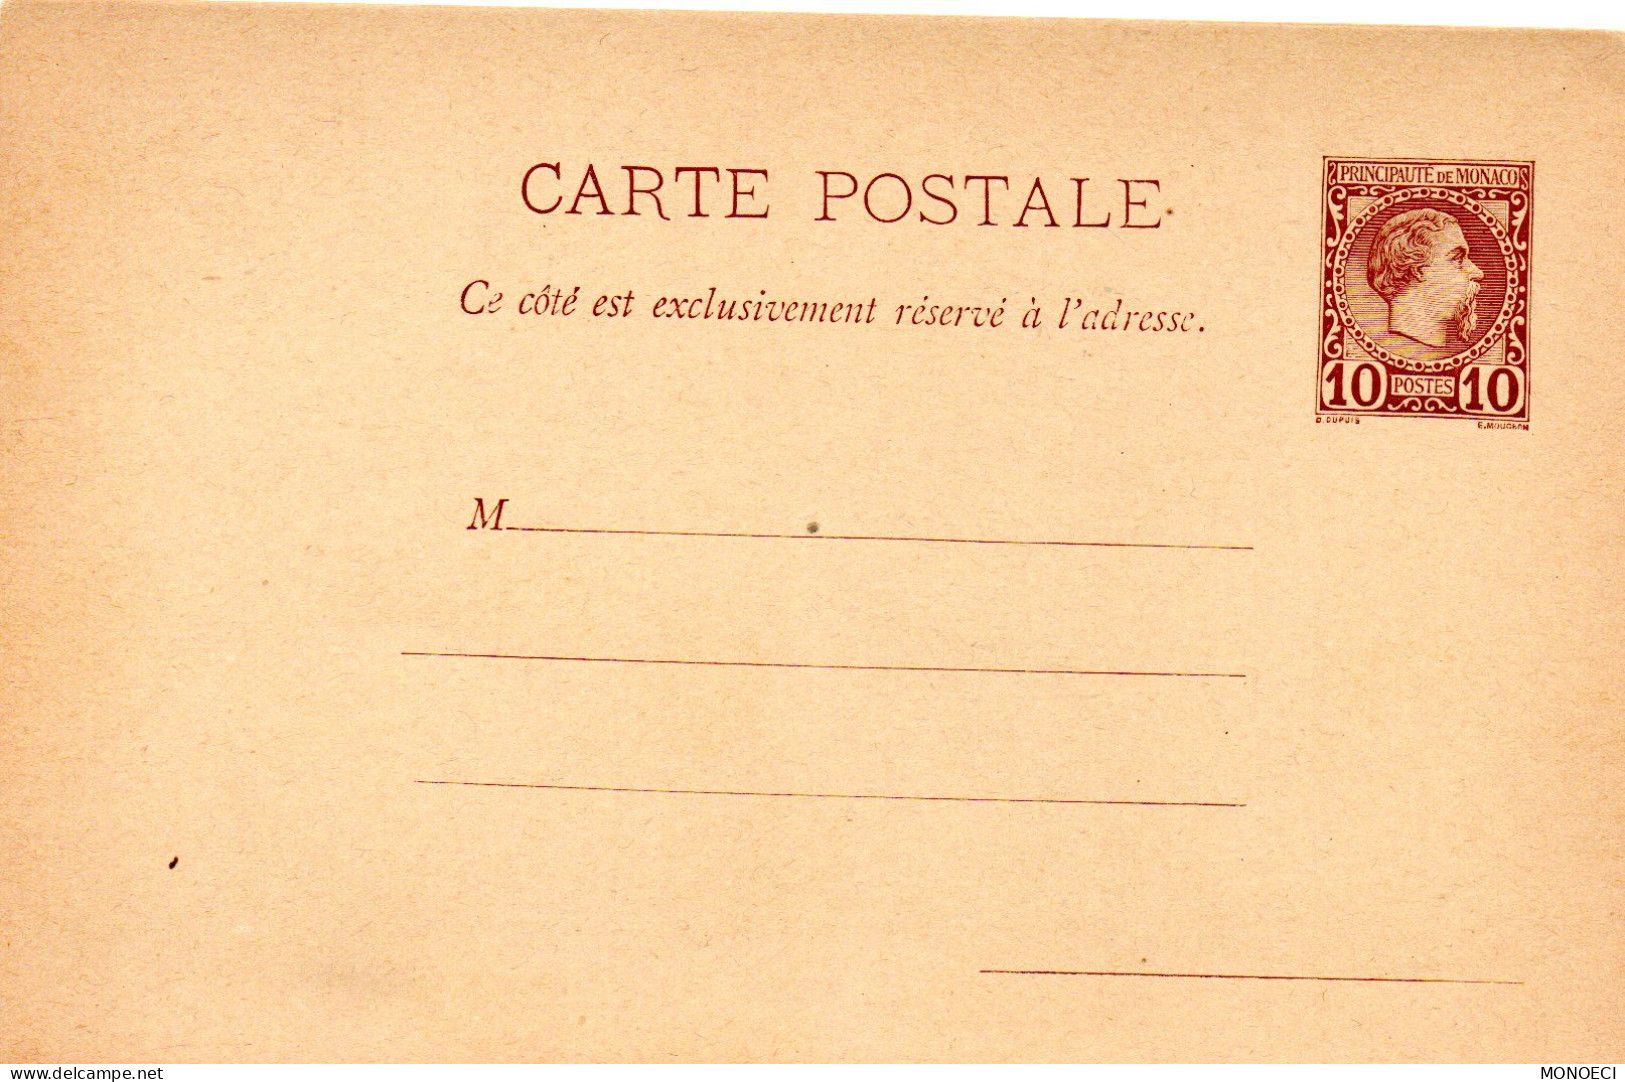 MONACO -- MONTE CARLO -- Entier Postal -- Carte Postale -- 10 C. Brun Sur Jaune Paille Prince Charles III - Ganzsachen